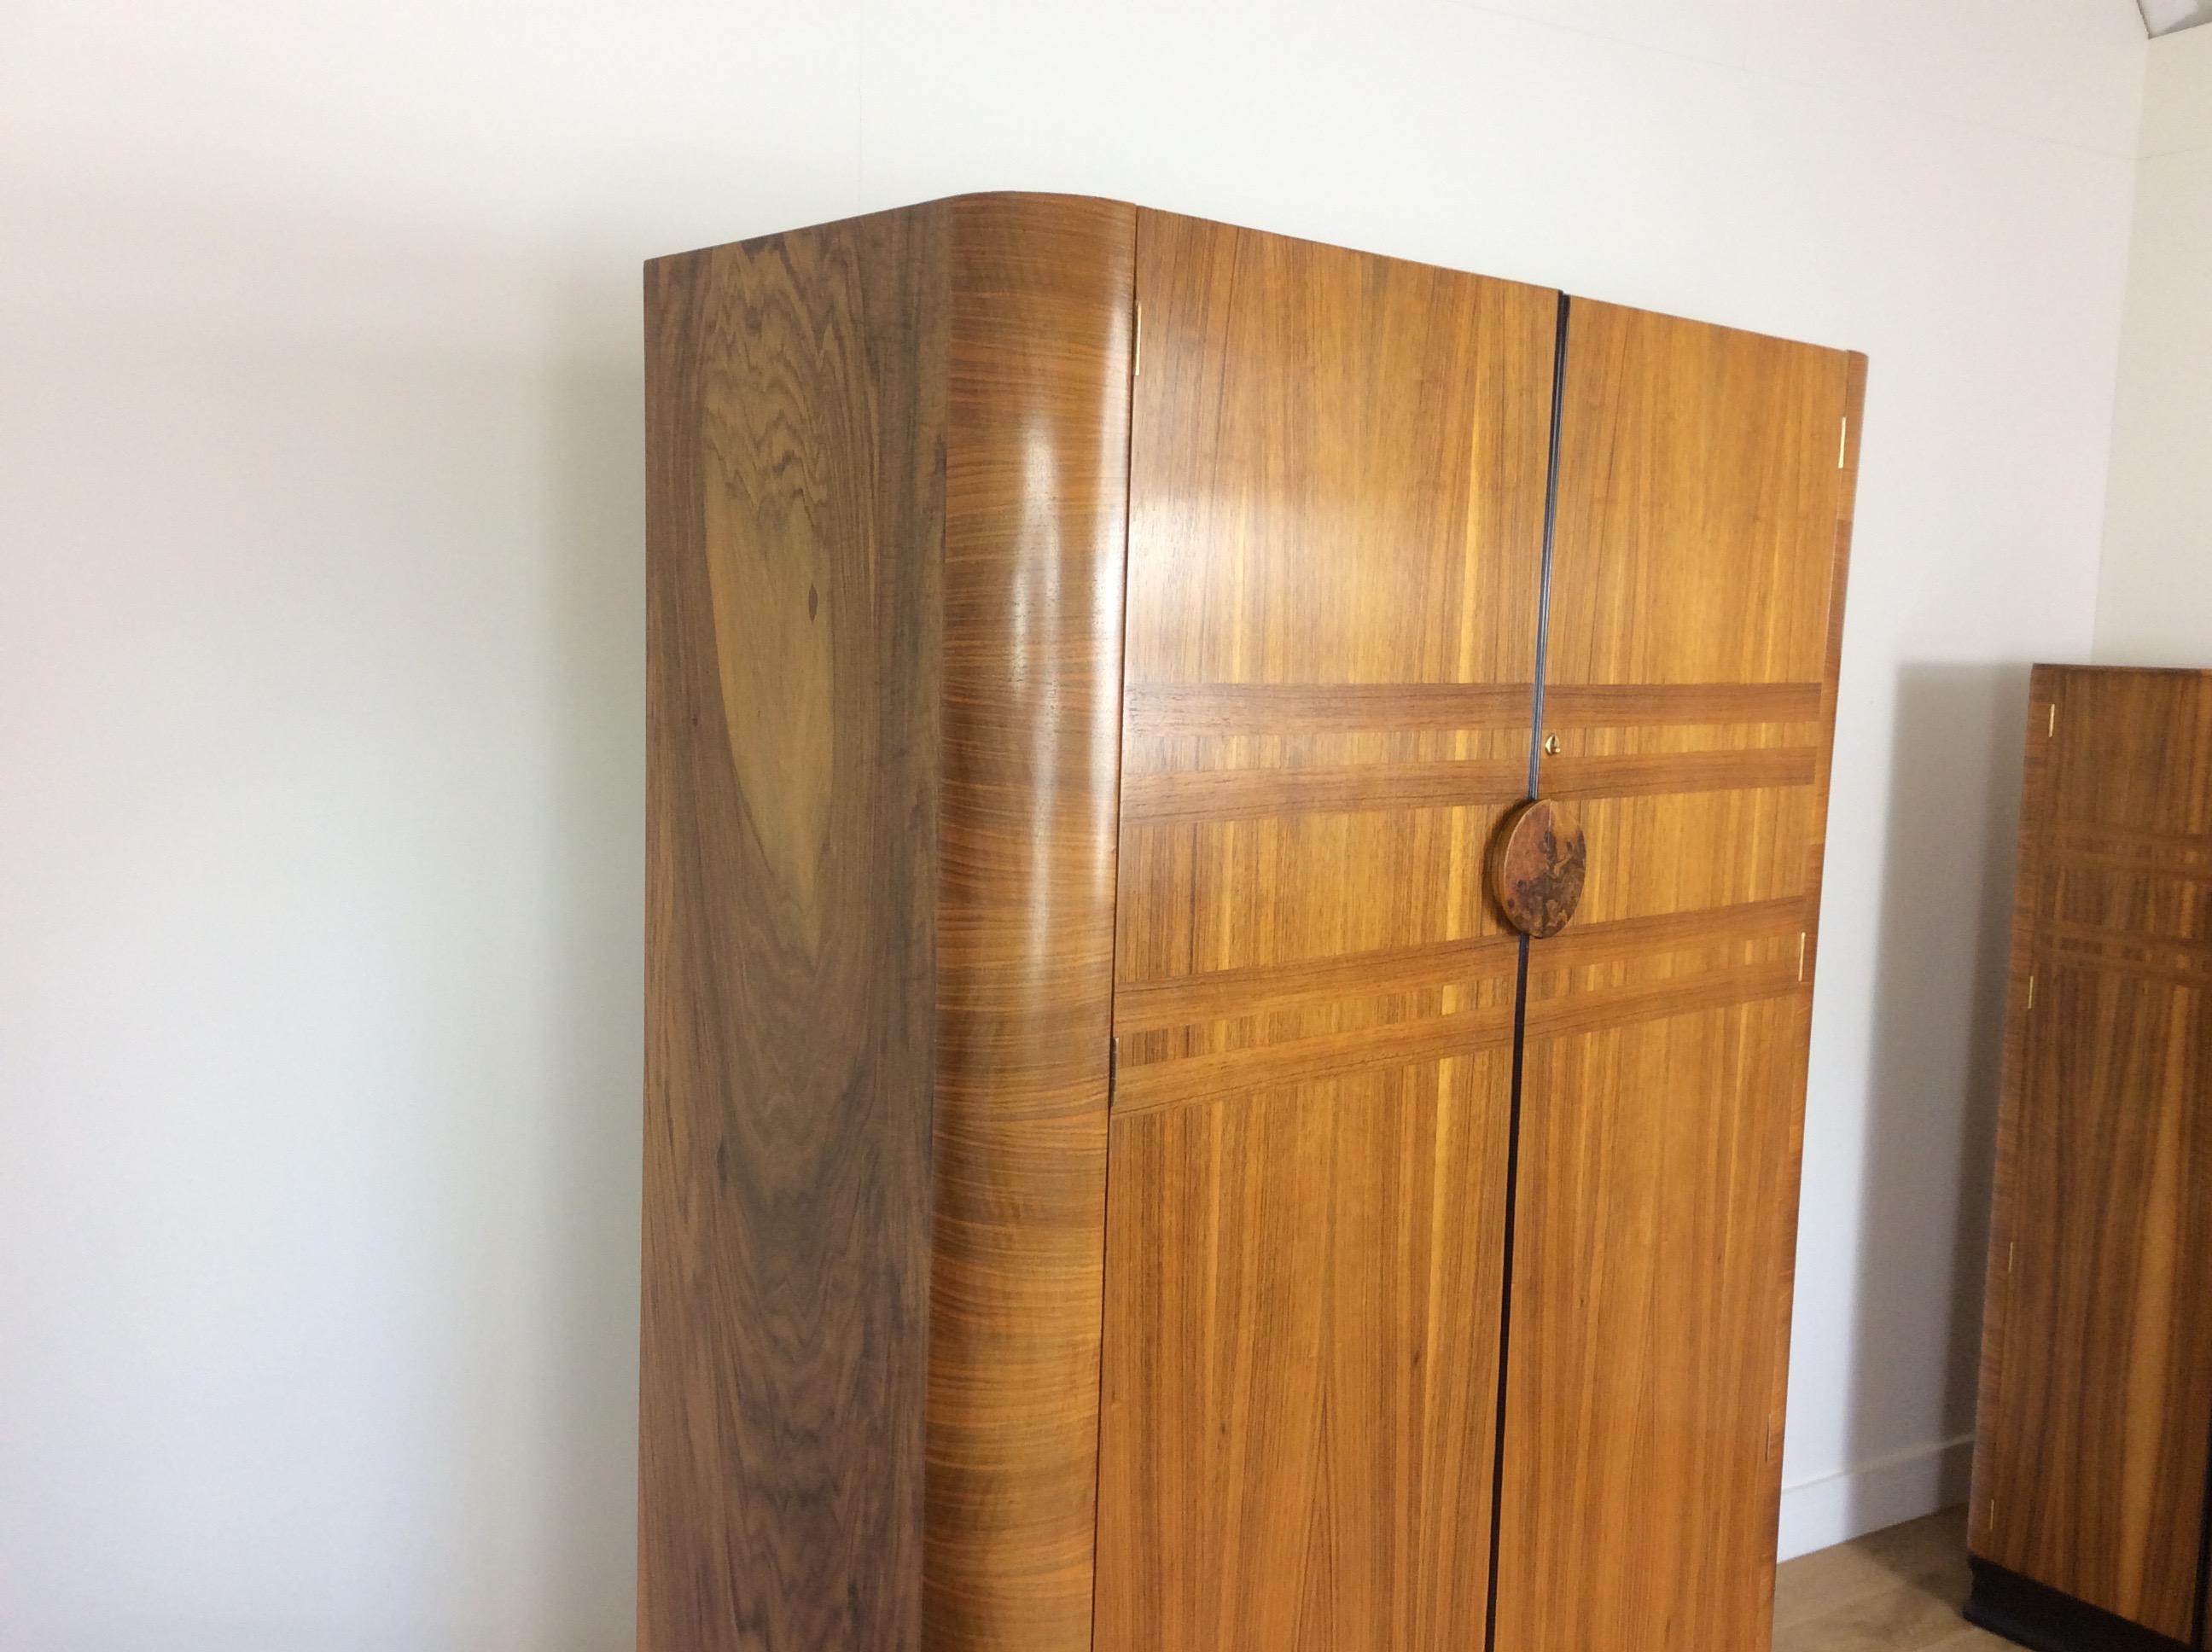 Art Deco wardrobe.
Beautiful walnut veneers, internally fitted clothes rails and single shelf.
Palatial furniture designers.
Measures: 187 cm H, 117 cm W, 52 cm D
British, circa 1930.